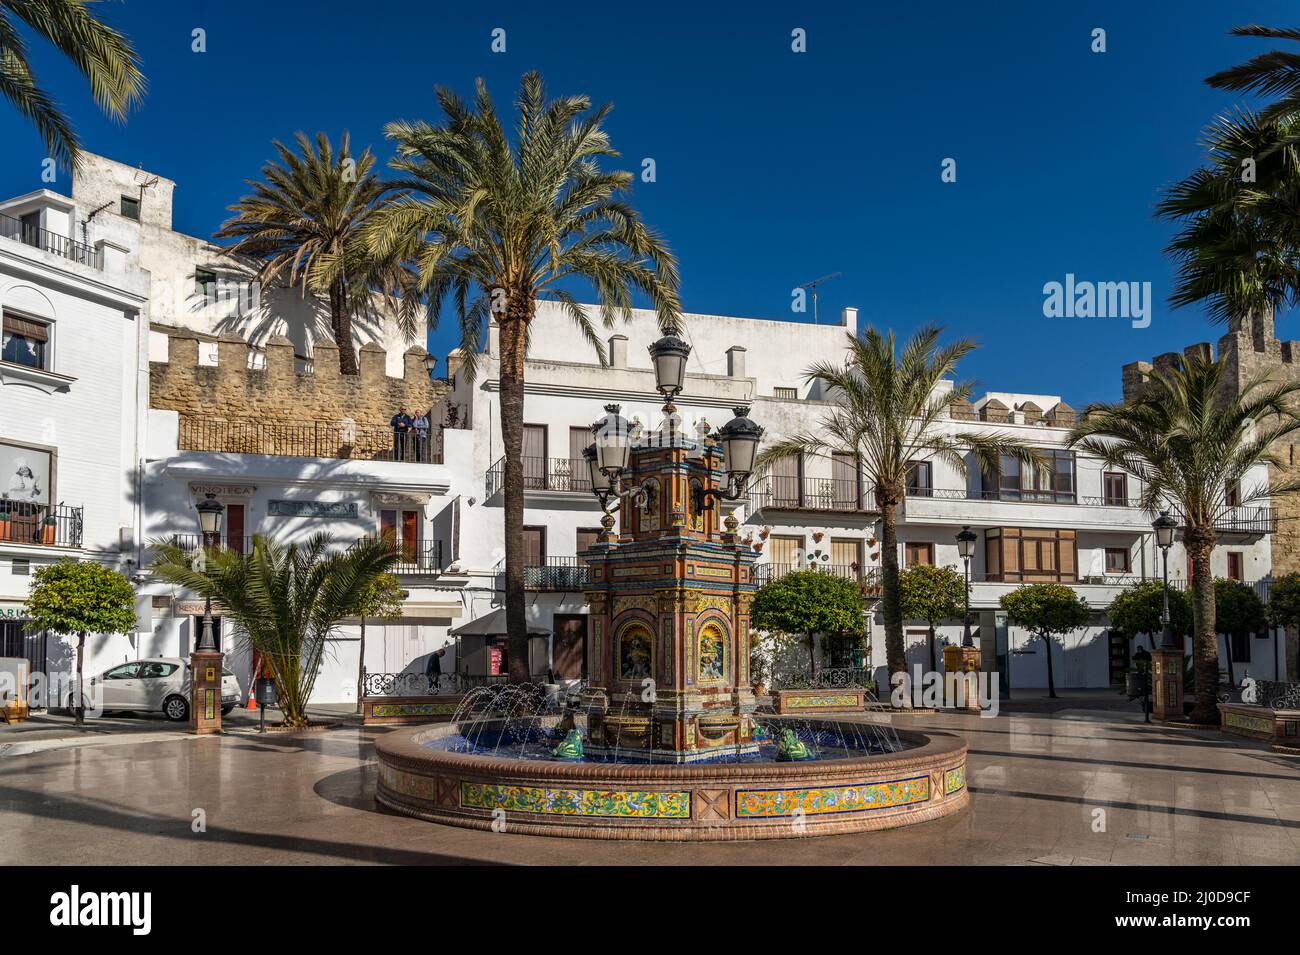 Brunnen und weisse Häuser am Platz Plaza España, Vejer de la Frontera, Andalusien, Spanien  |  Fountain and white houses at Plaza España square, Vejer Stock Photo